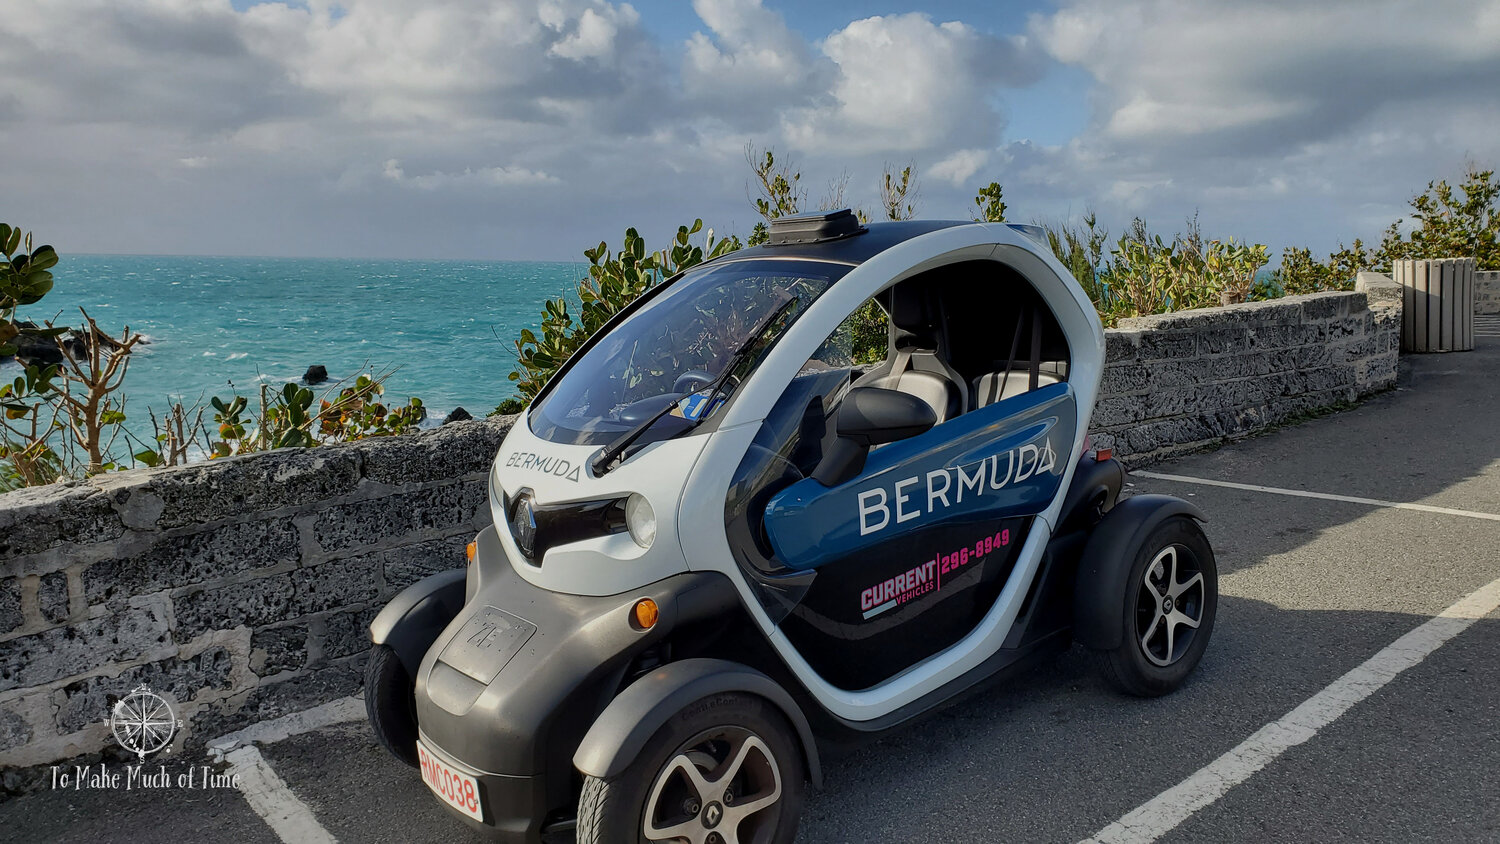 Bermuda: Getting Around & Transportation Options